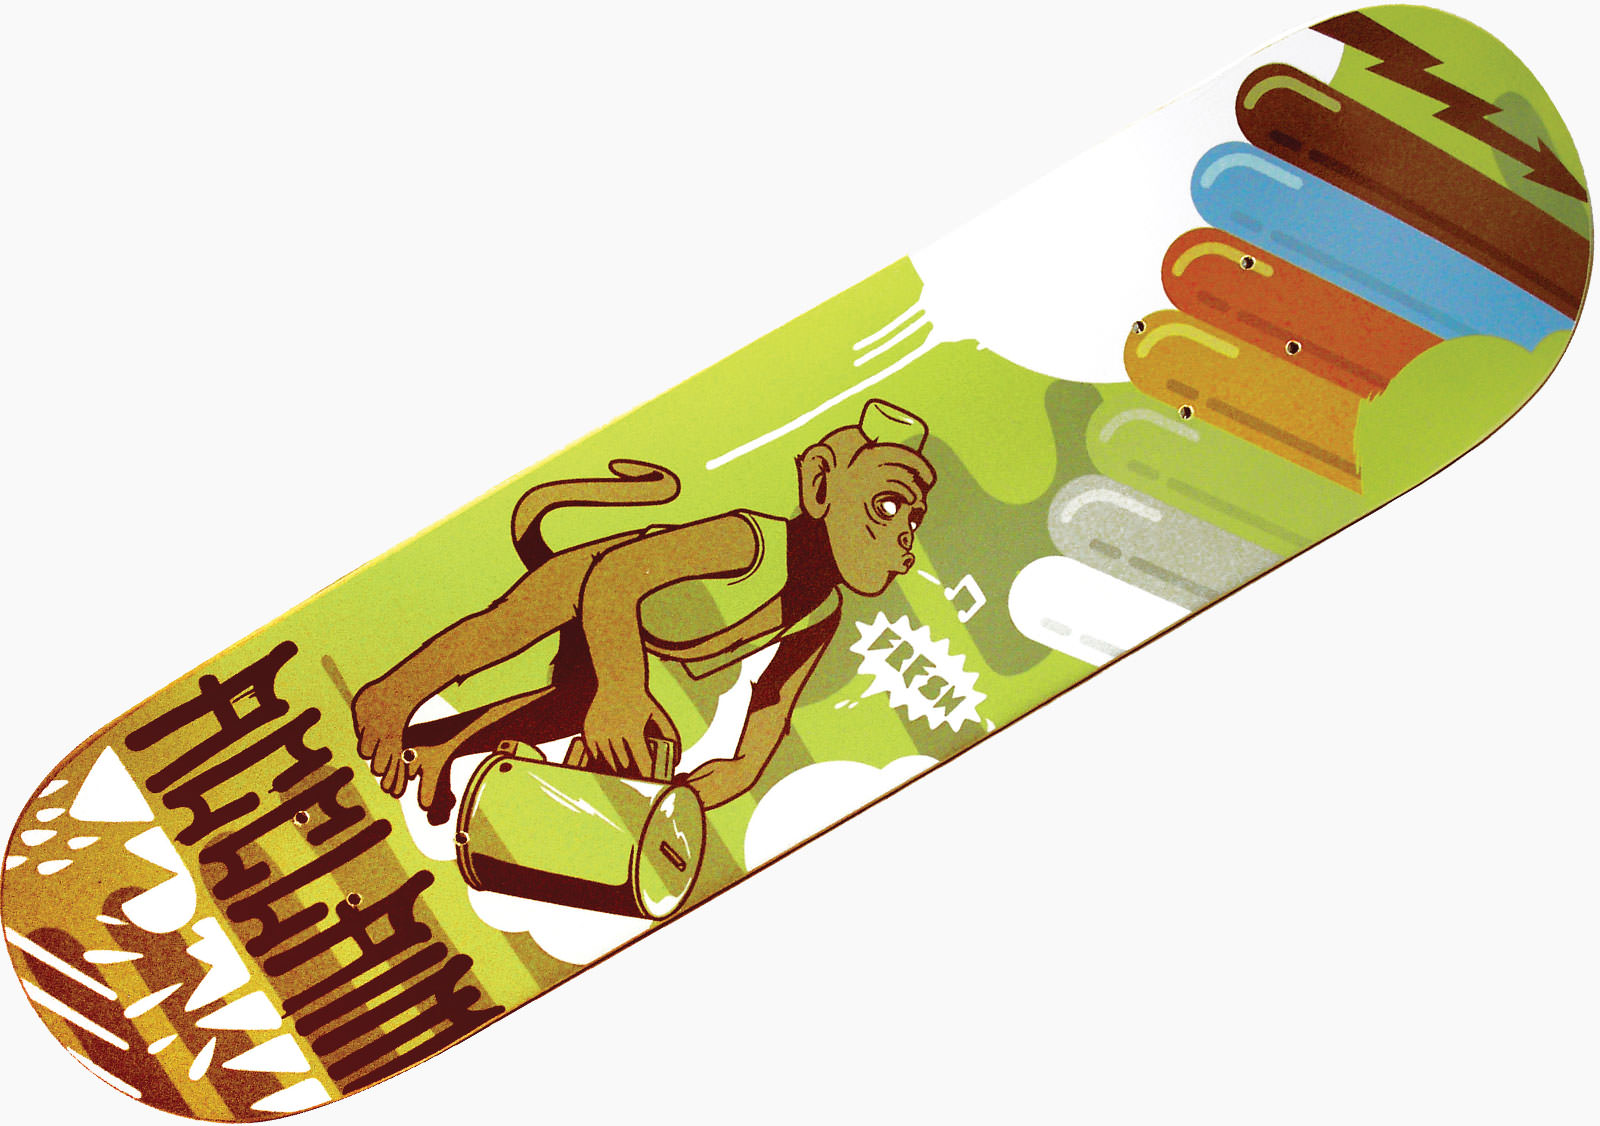 skateboard deck design for acclaim magazine